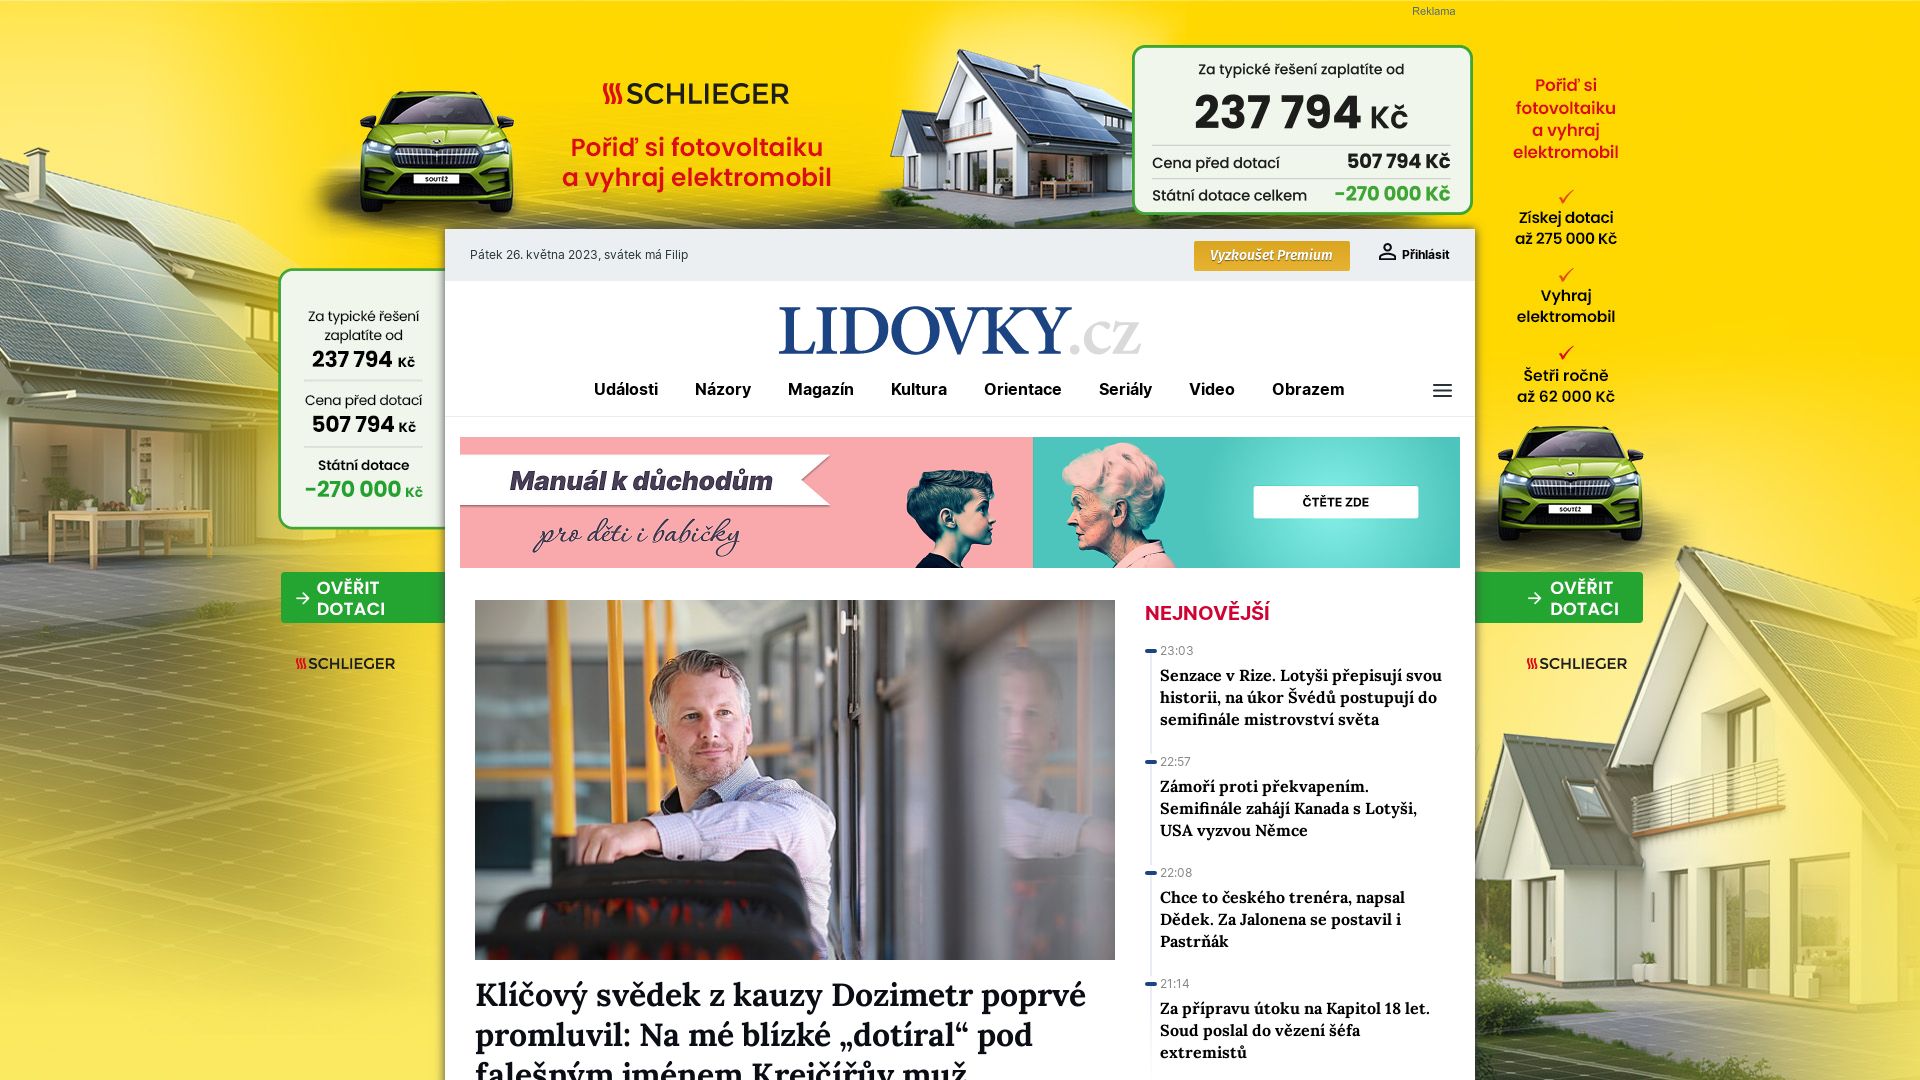 Website status lidovky.cz is   ONLINE